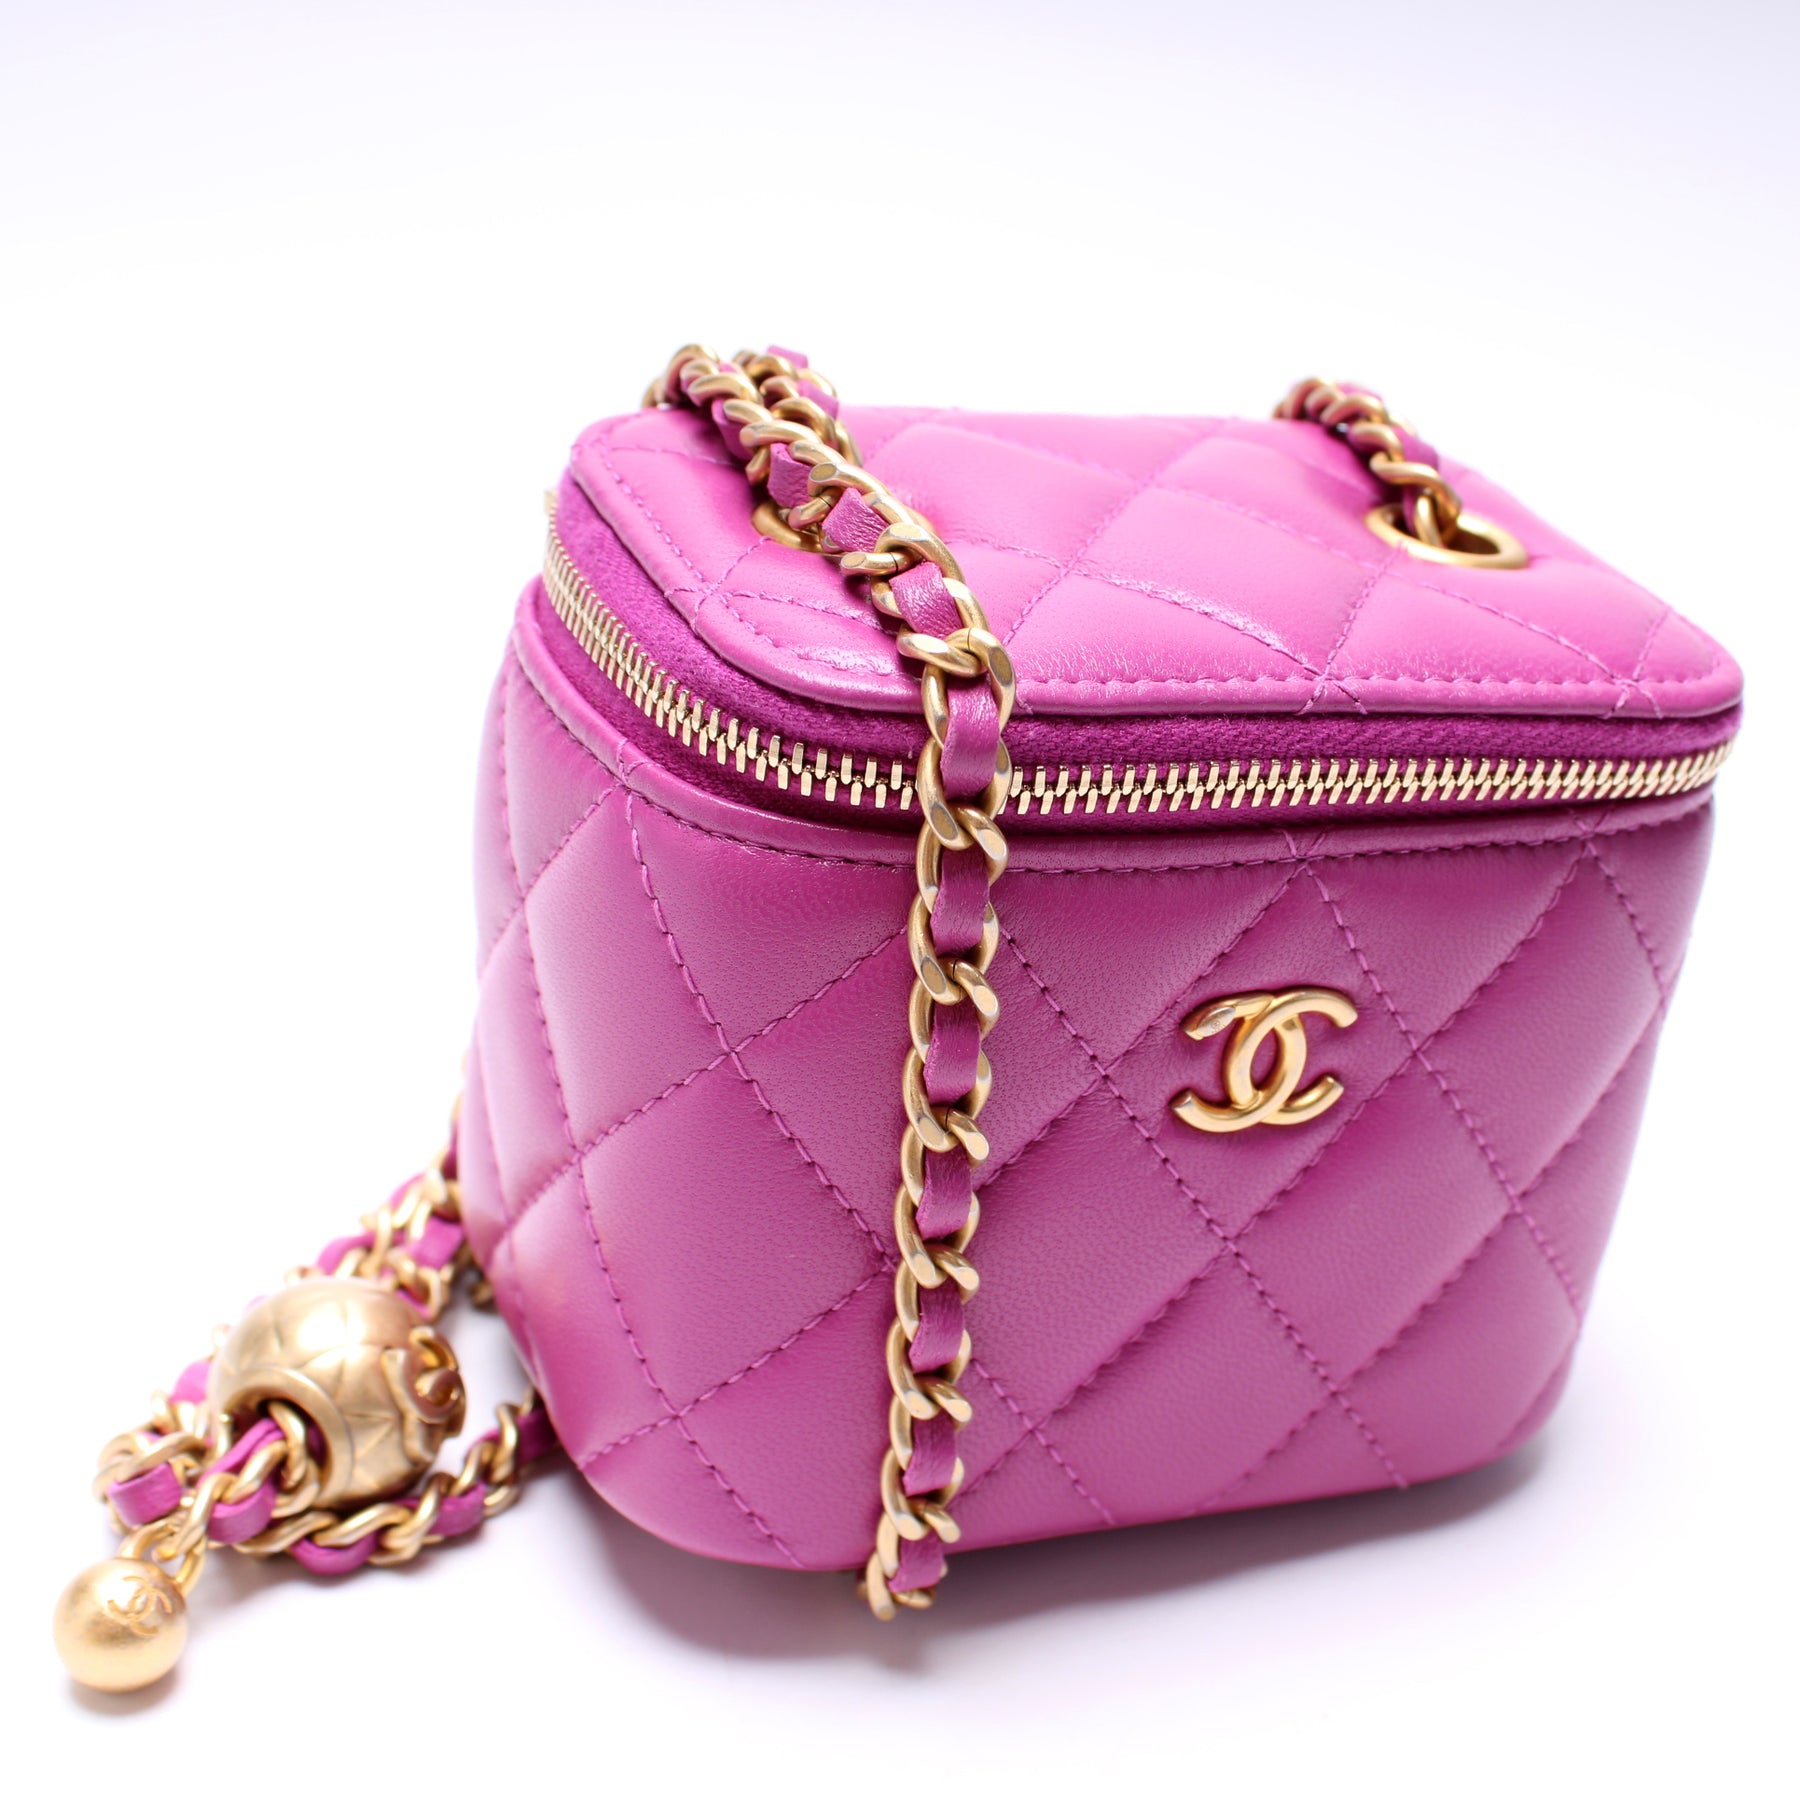 Chanel Mini Vanity Case w/ Chain - Pink Mini Bags, Handbags